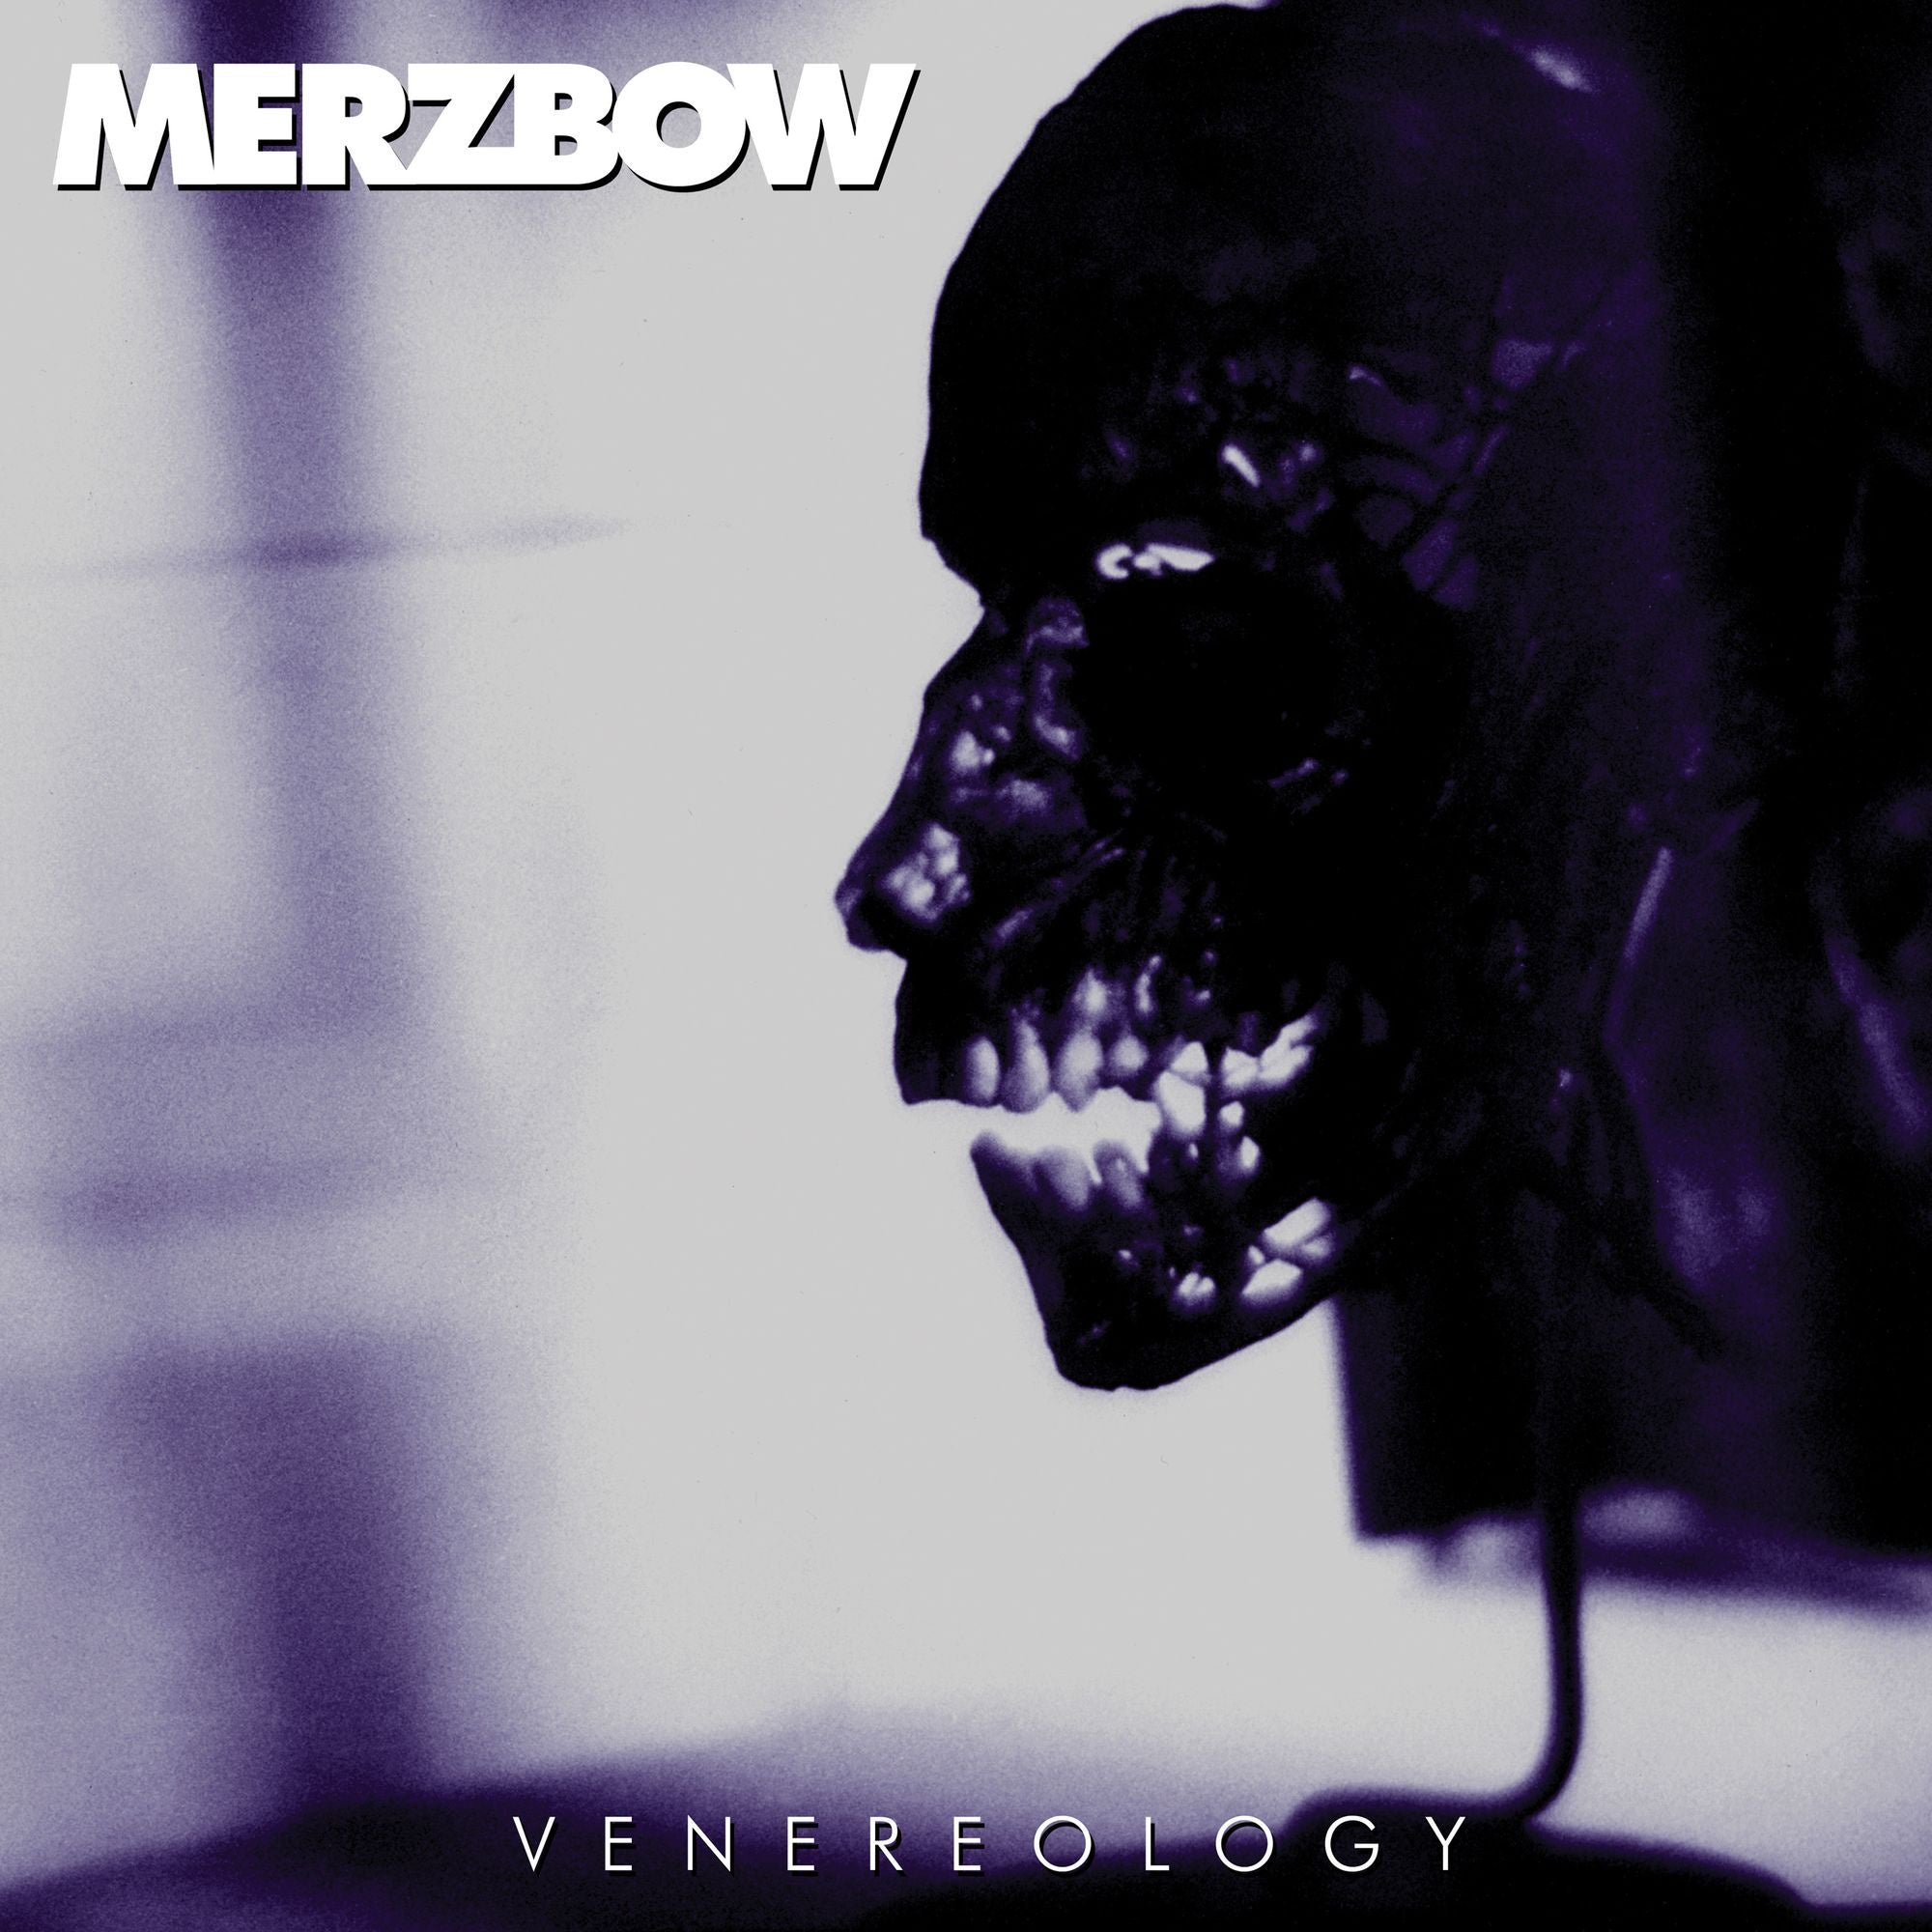 Merzbow - Venereology (1994) - New Vinyl 2 Lp 2019 Relapse Reissue with Bonus Lp of Unreleased Material - Japanese Electronic / Noise